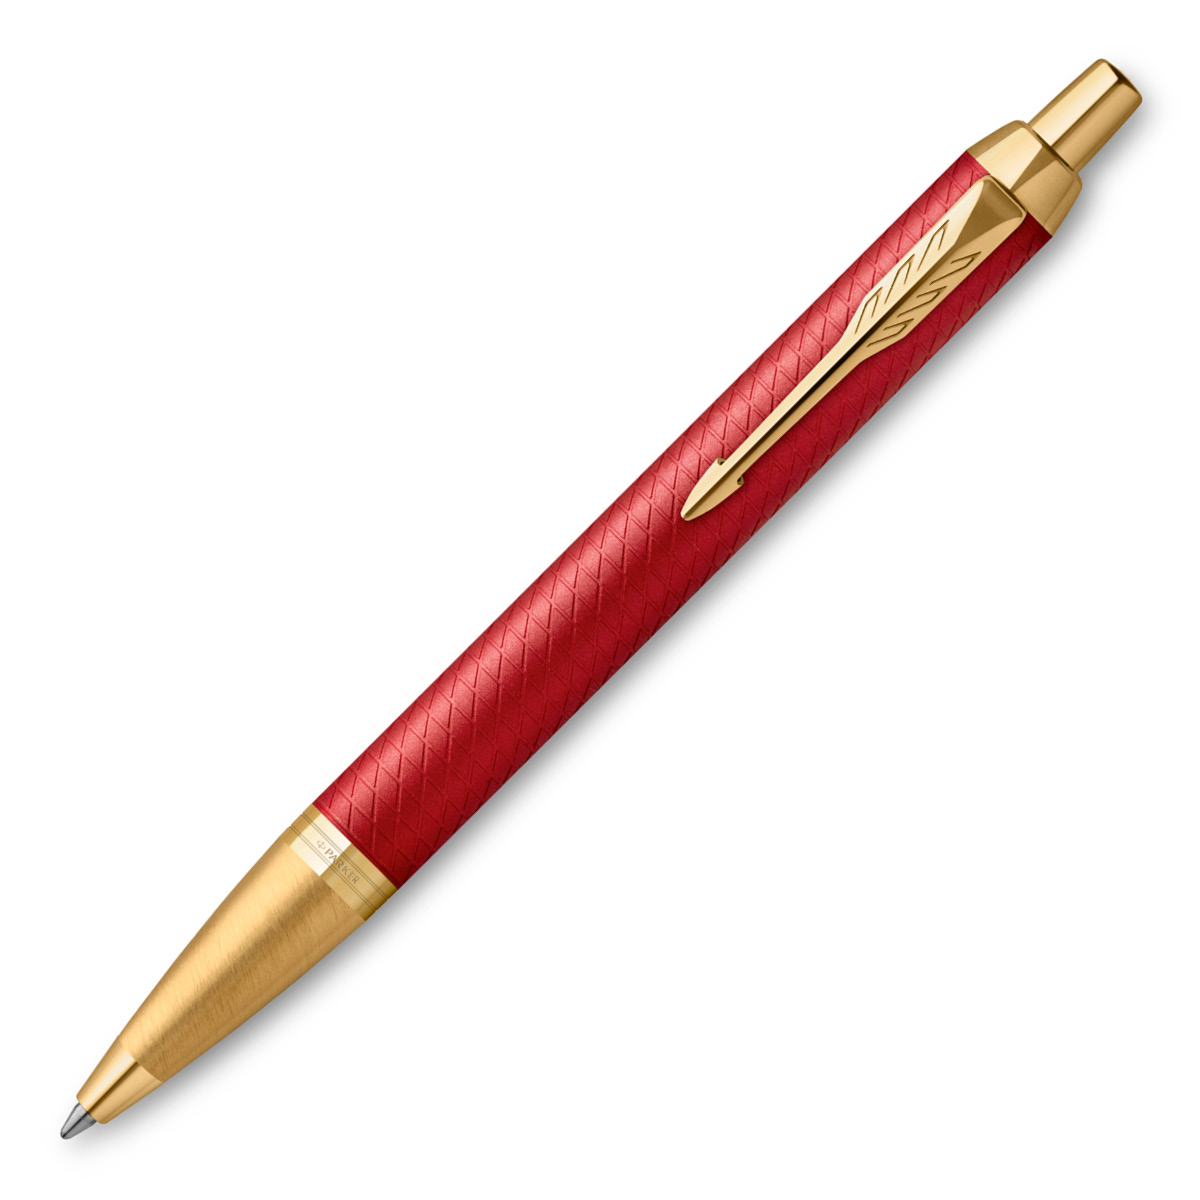 IM Premium Red/Gold Ballpoint pen in the group Pens / Fine Writing / Ballpoint Pens at Pen Store (112690)